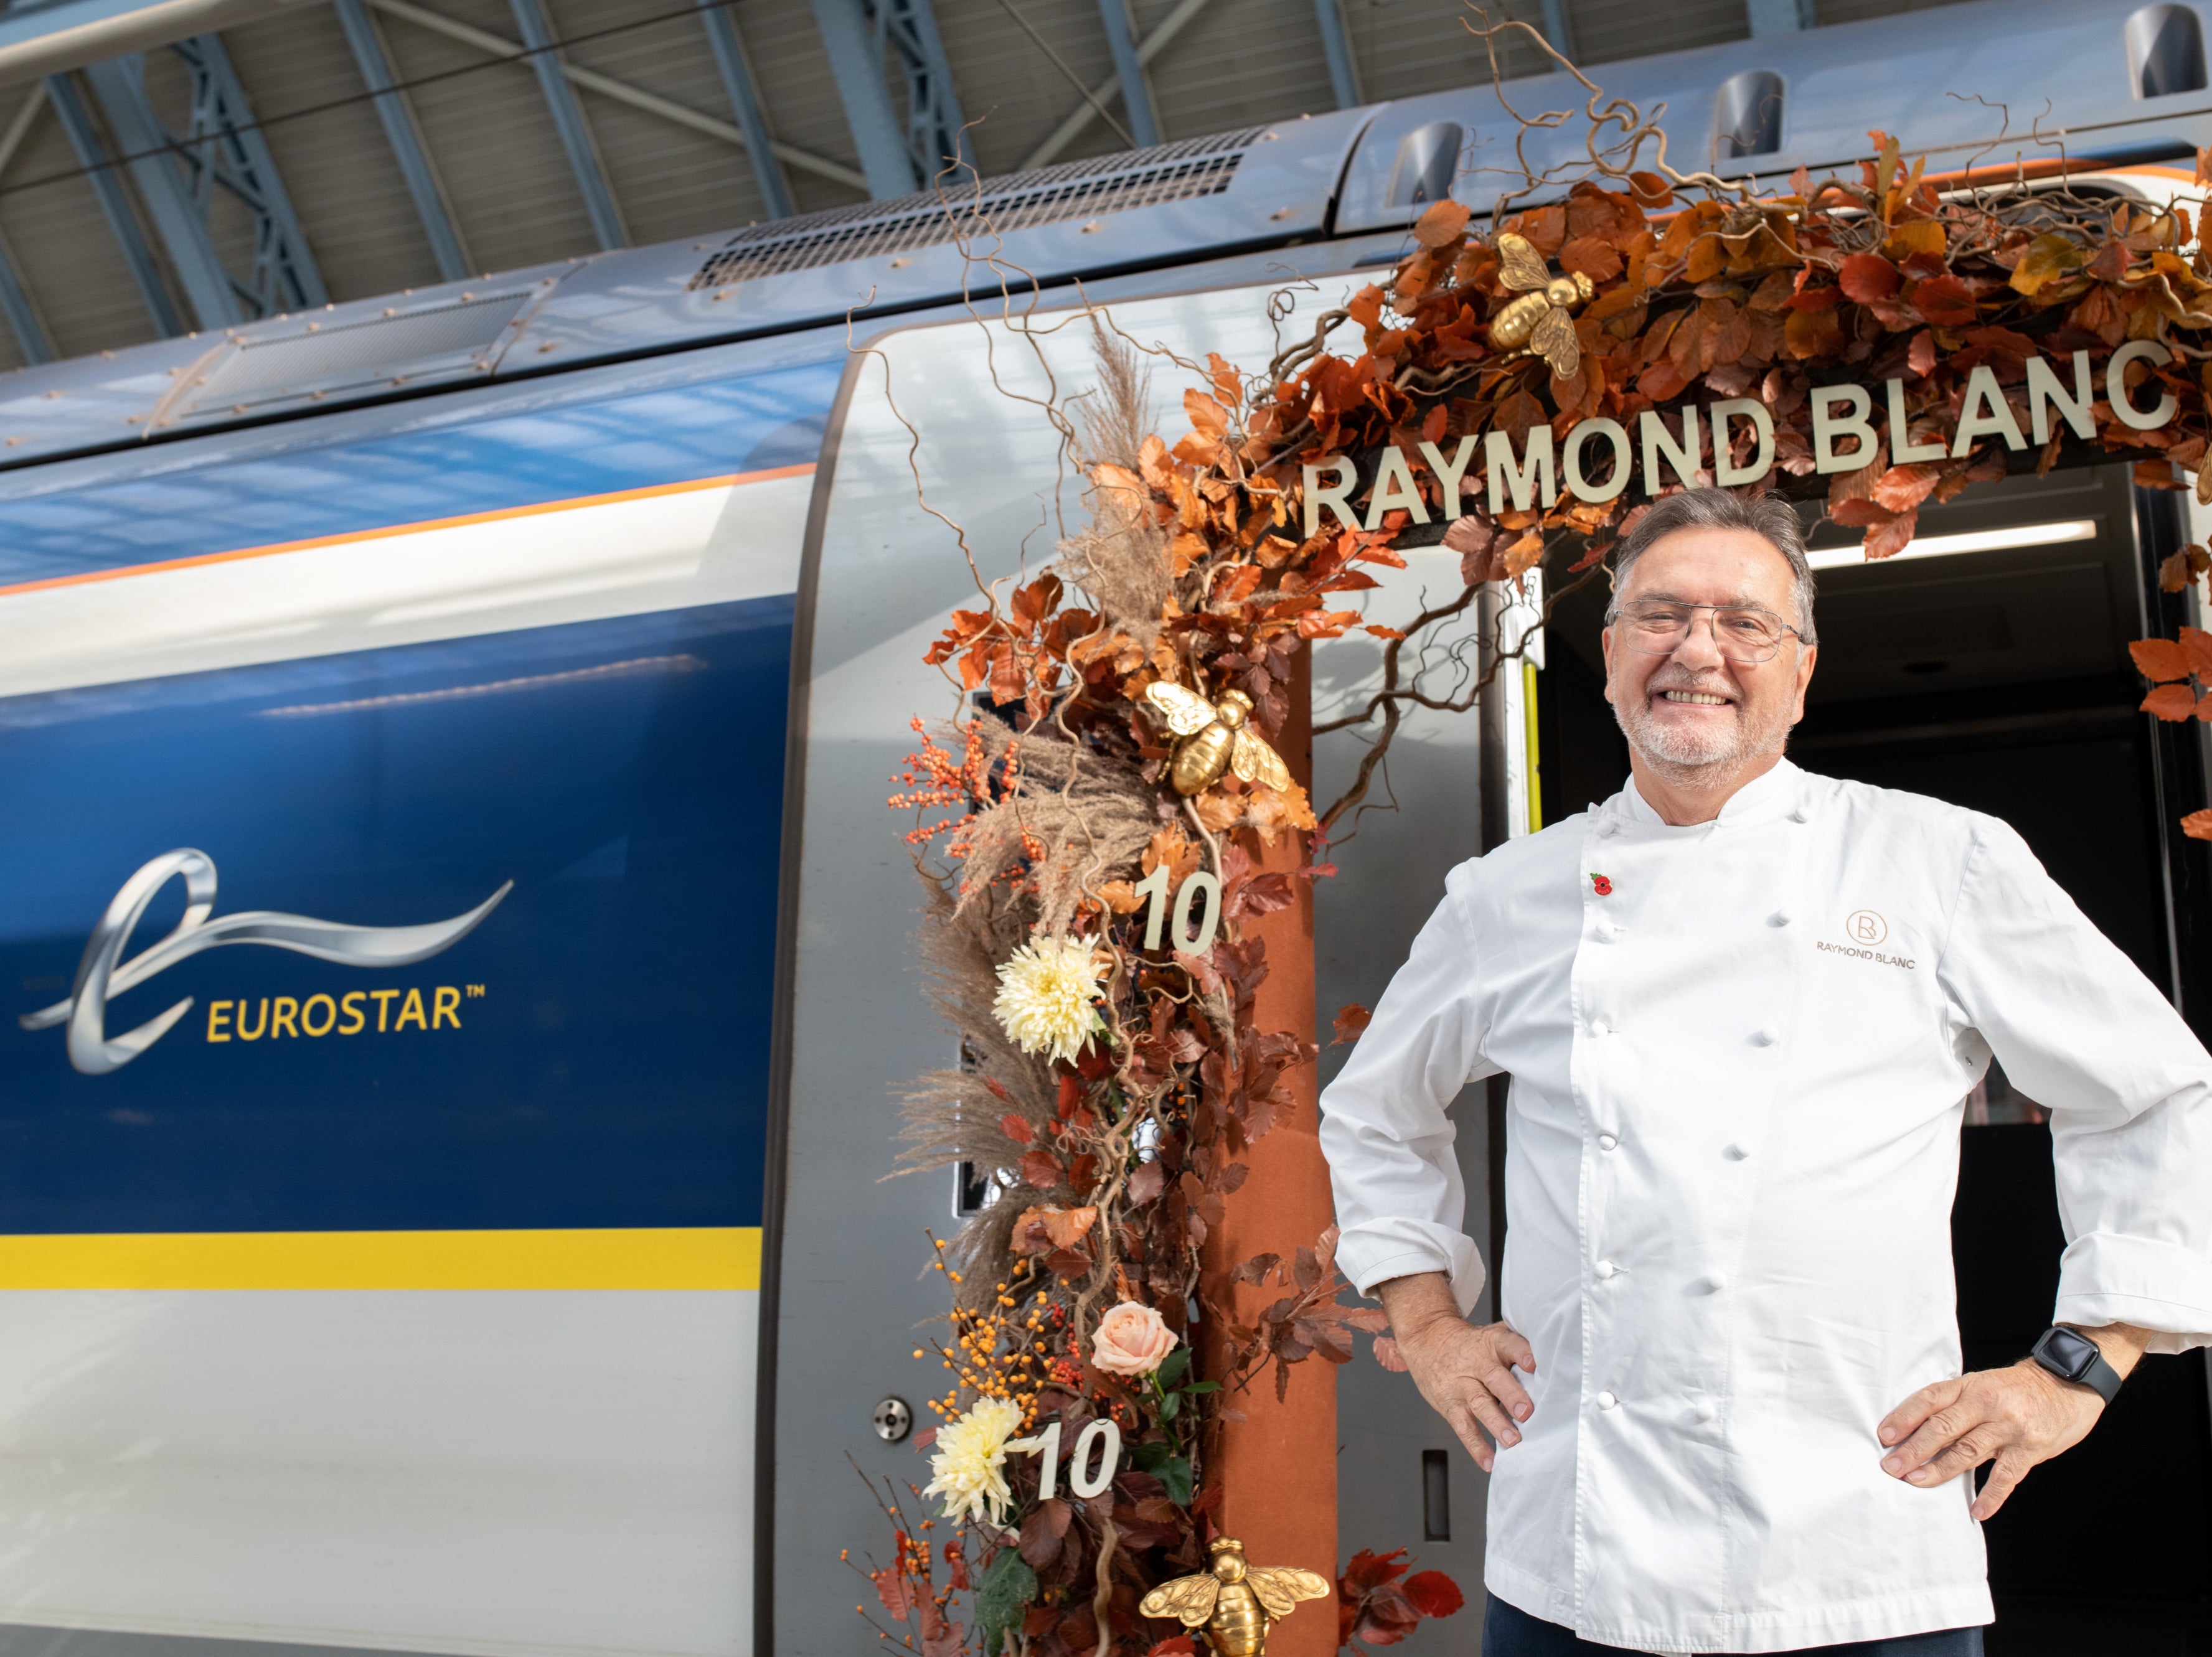 Eurostar has partnered with Raymond Blanc for 10 years